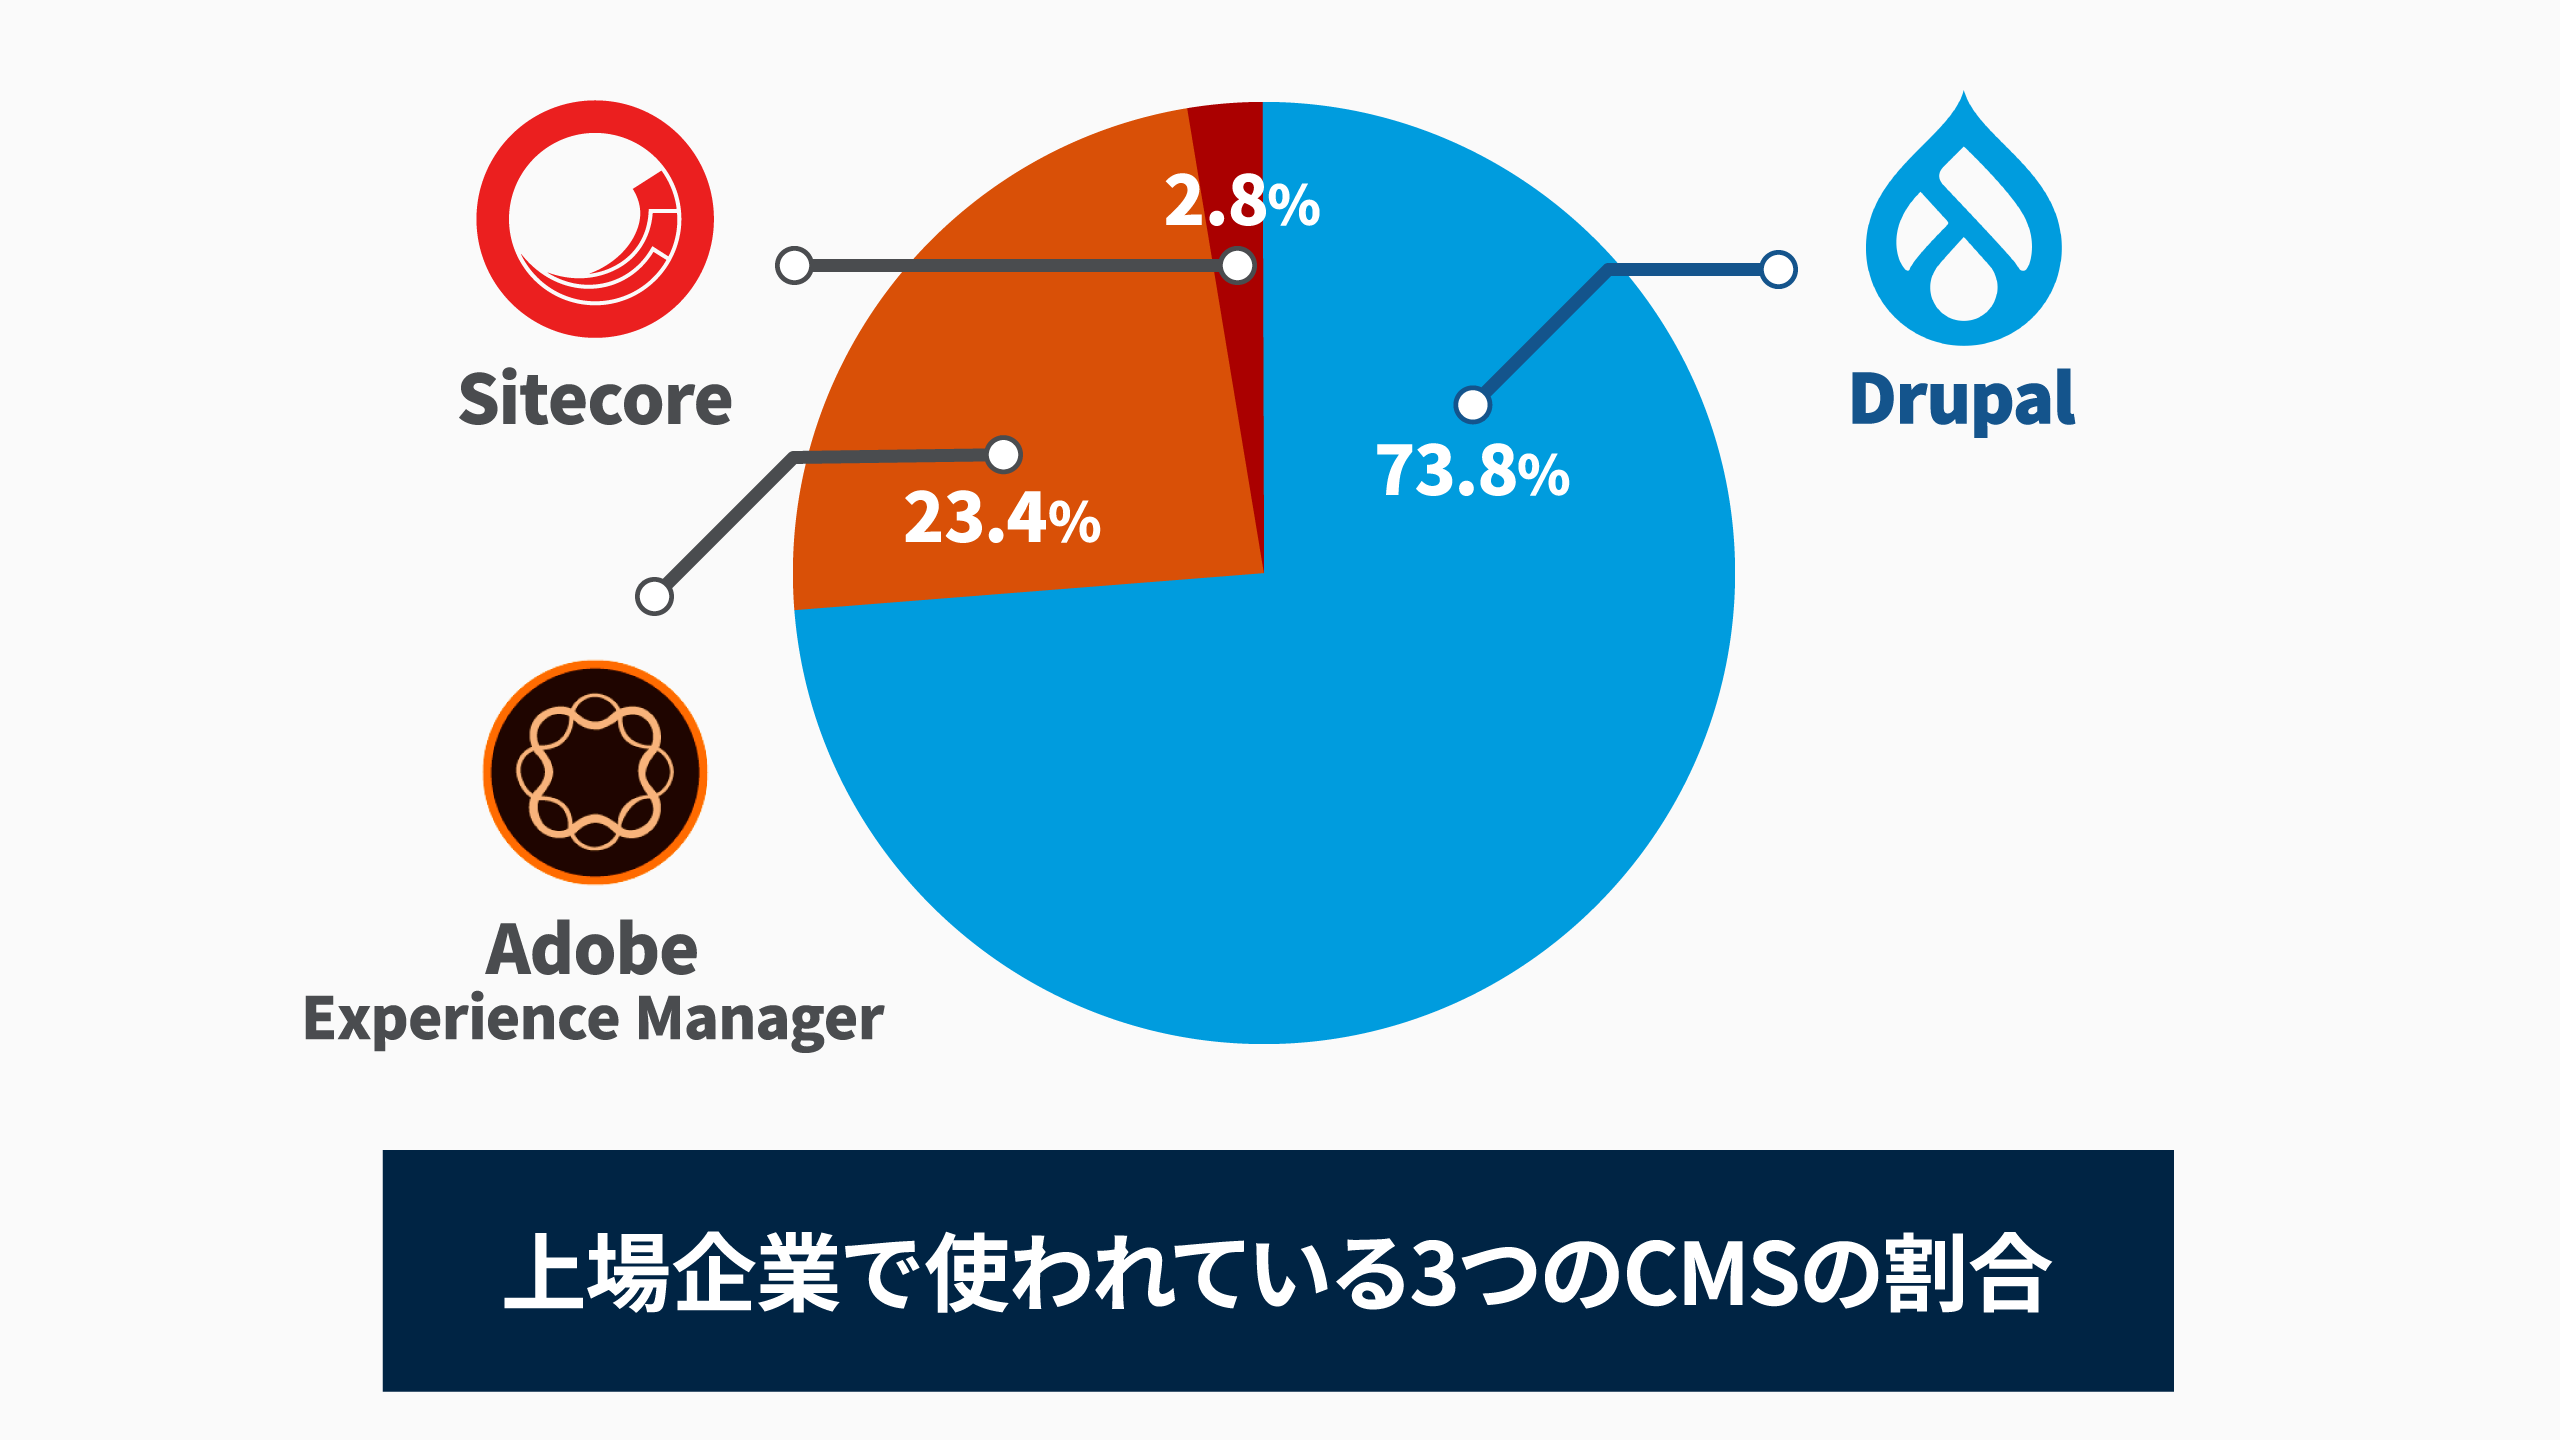 Drupal 73.8%、Adobe 23.4%、Sitecore 2/8%のグラフ